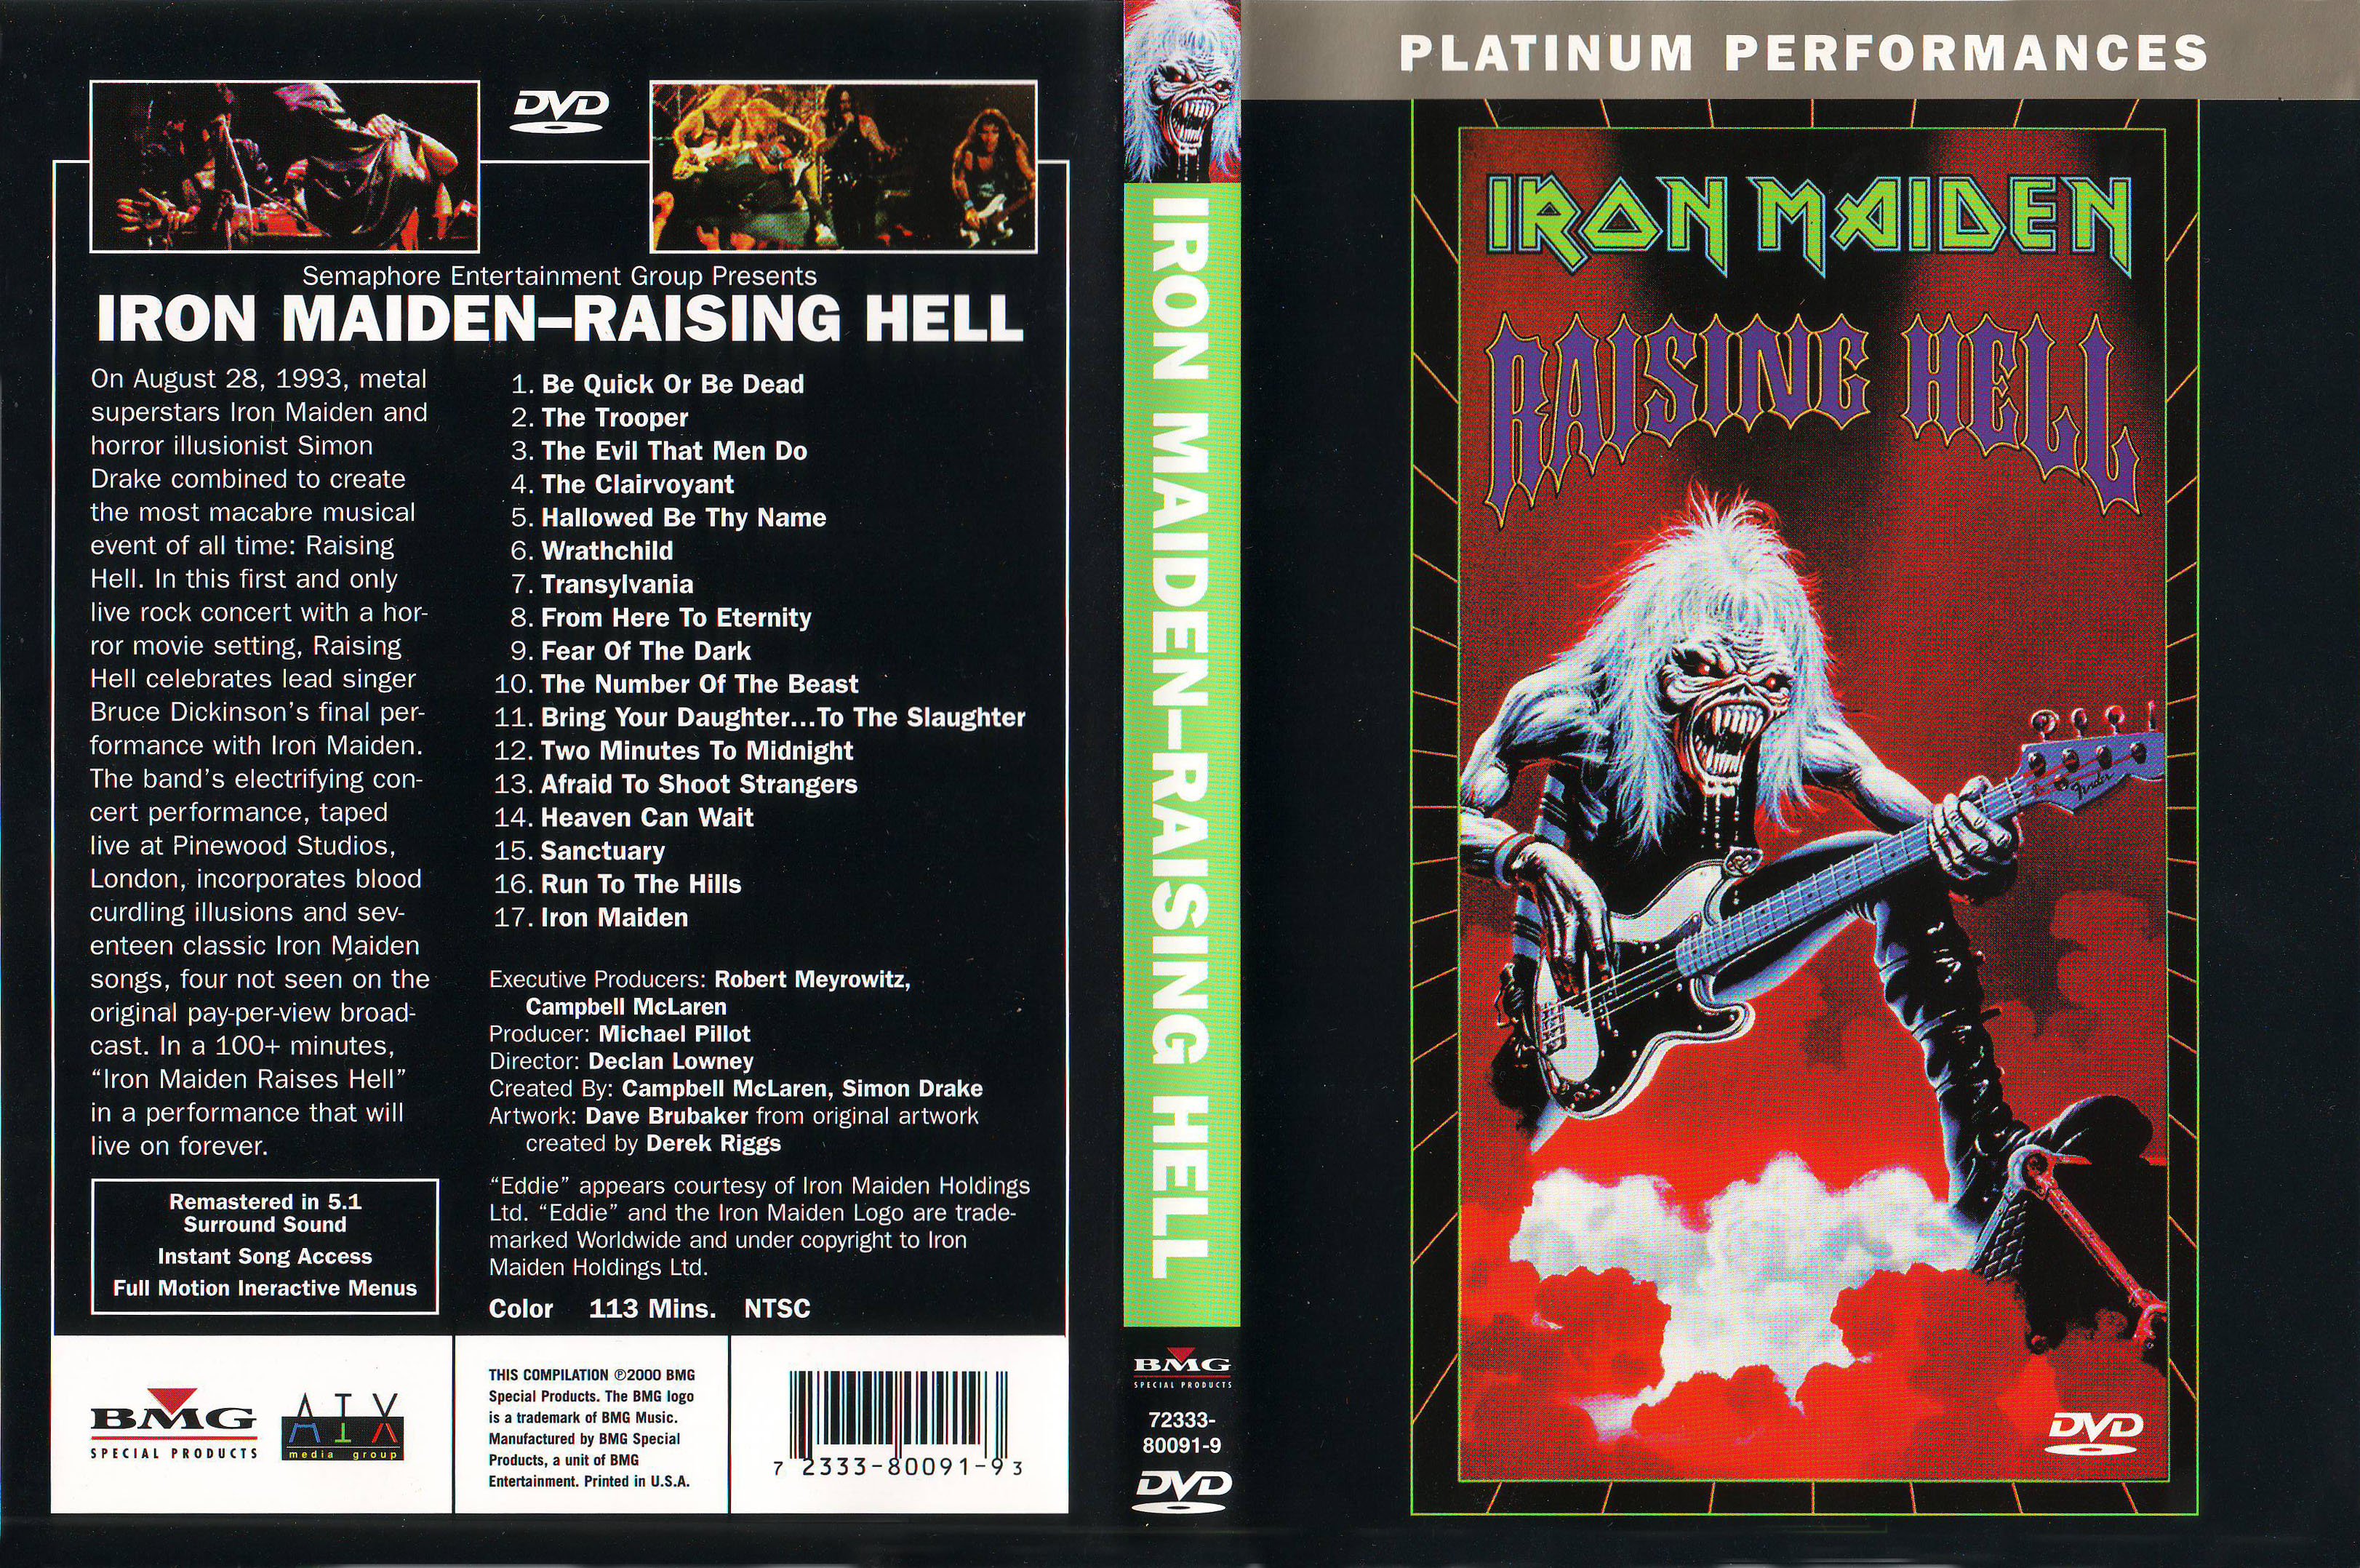 Jaquette DVD Iron Maiden - raising hell 2000